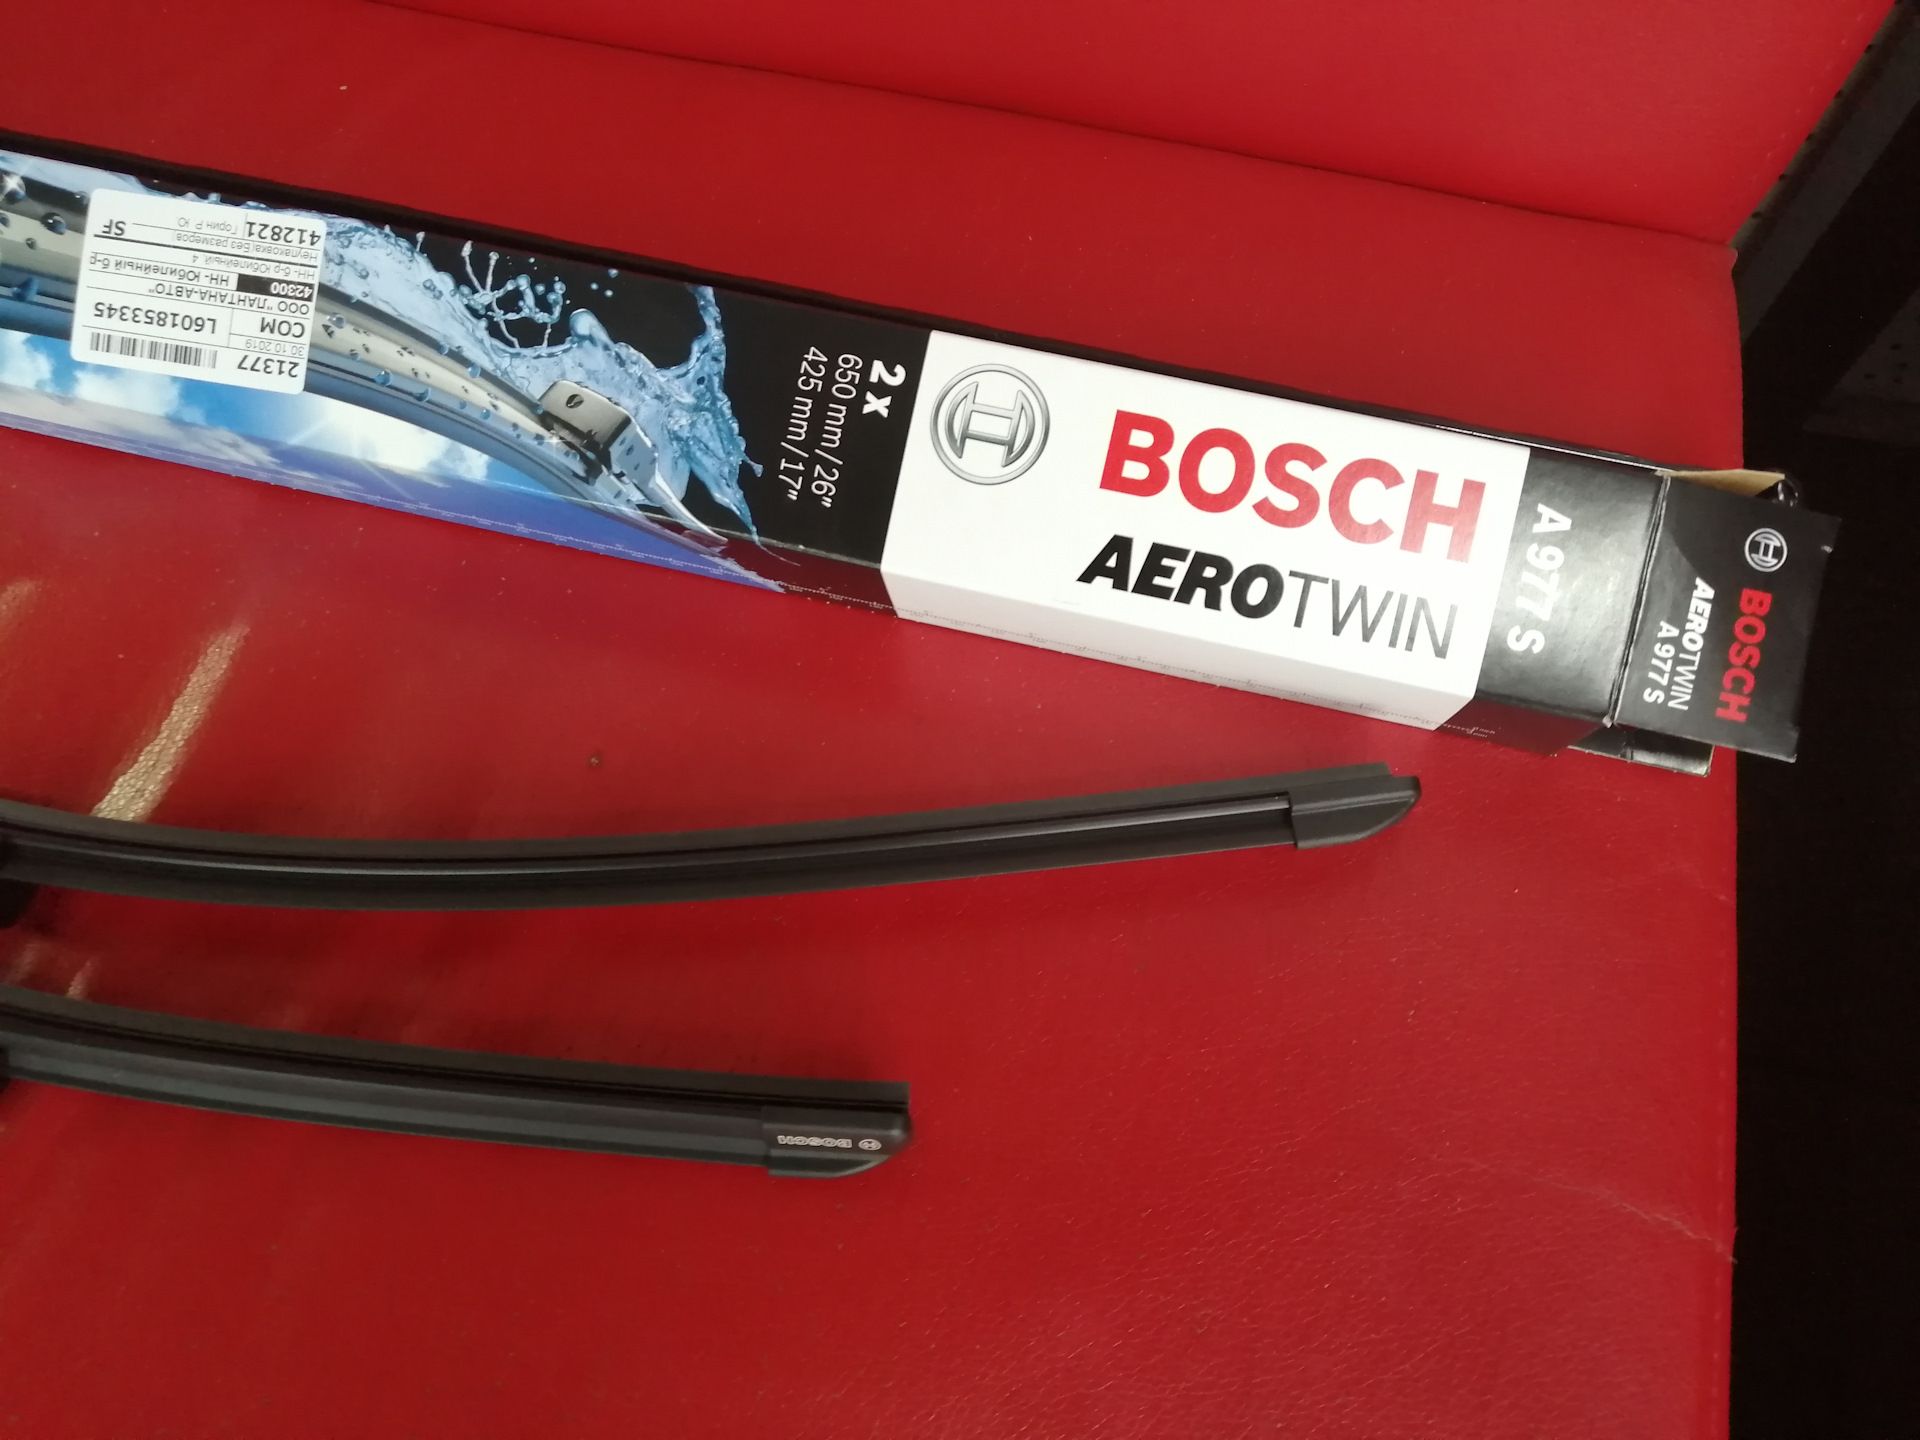 Bosch aerotwin купить